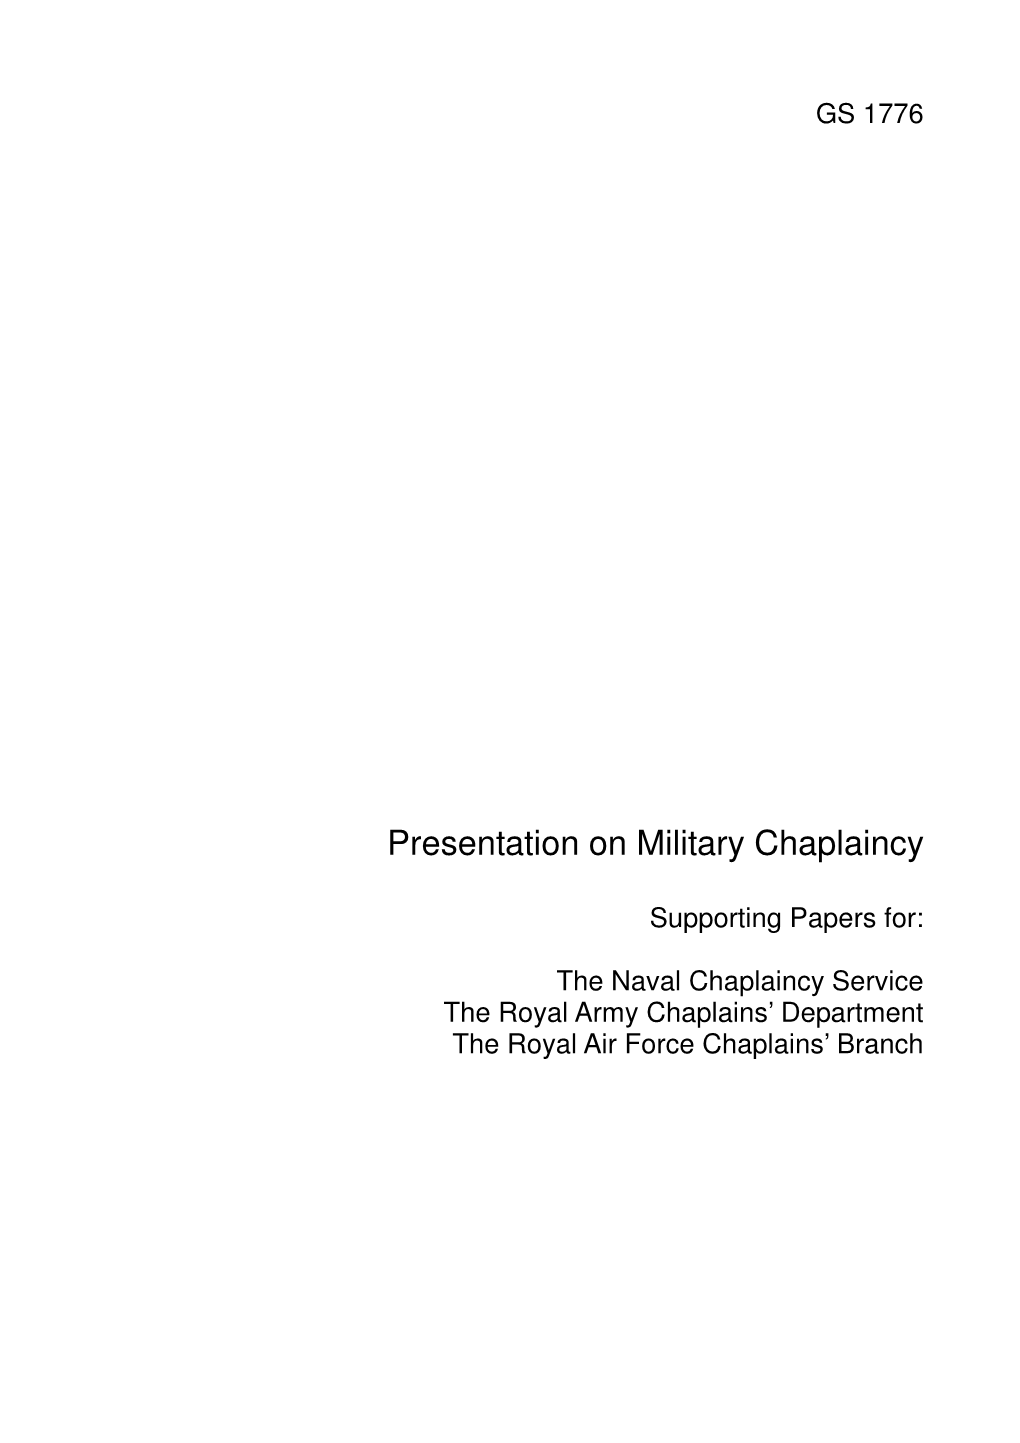 Presentation on Military Chaplaincy